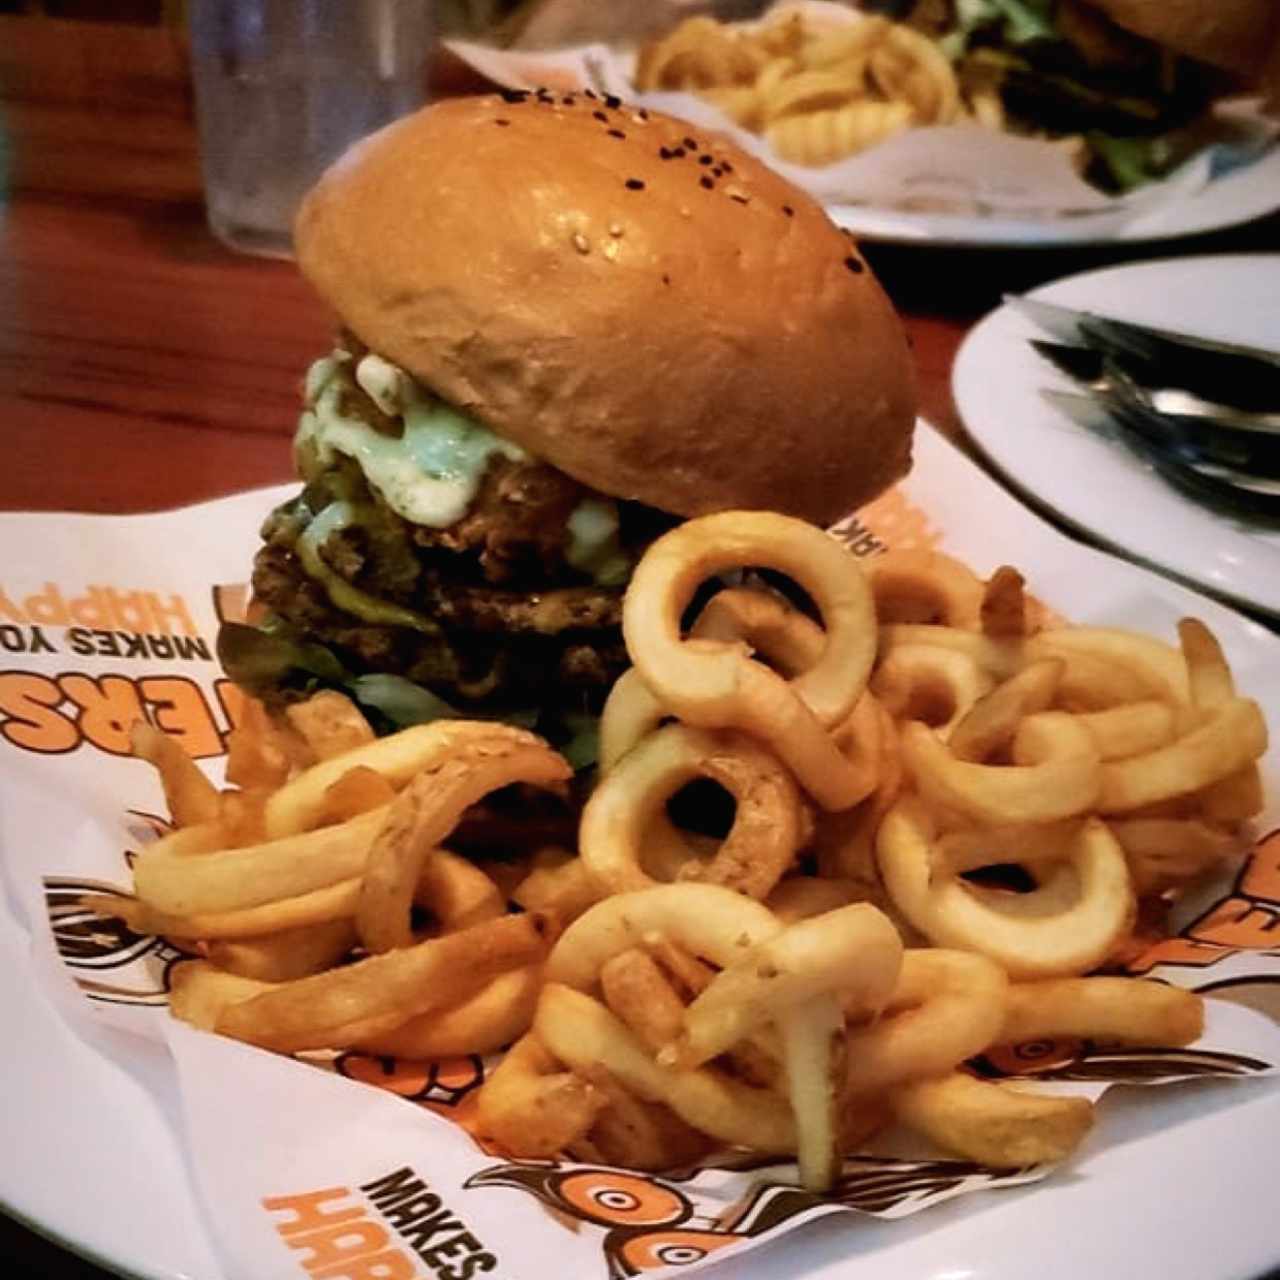 “La pechugona” burger week